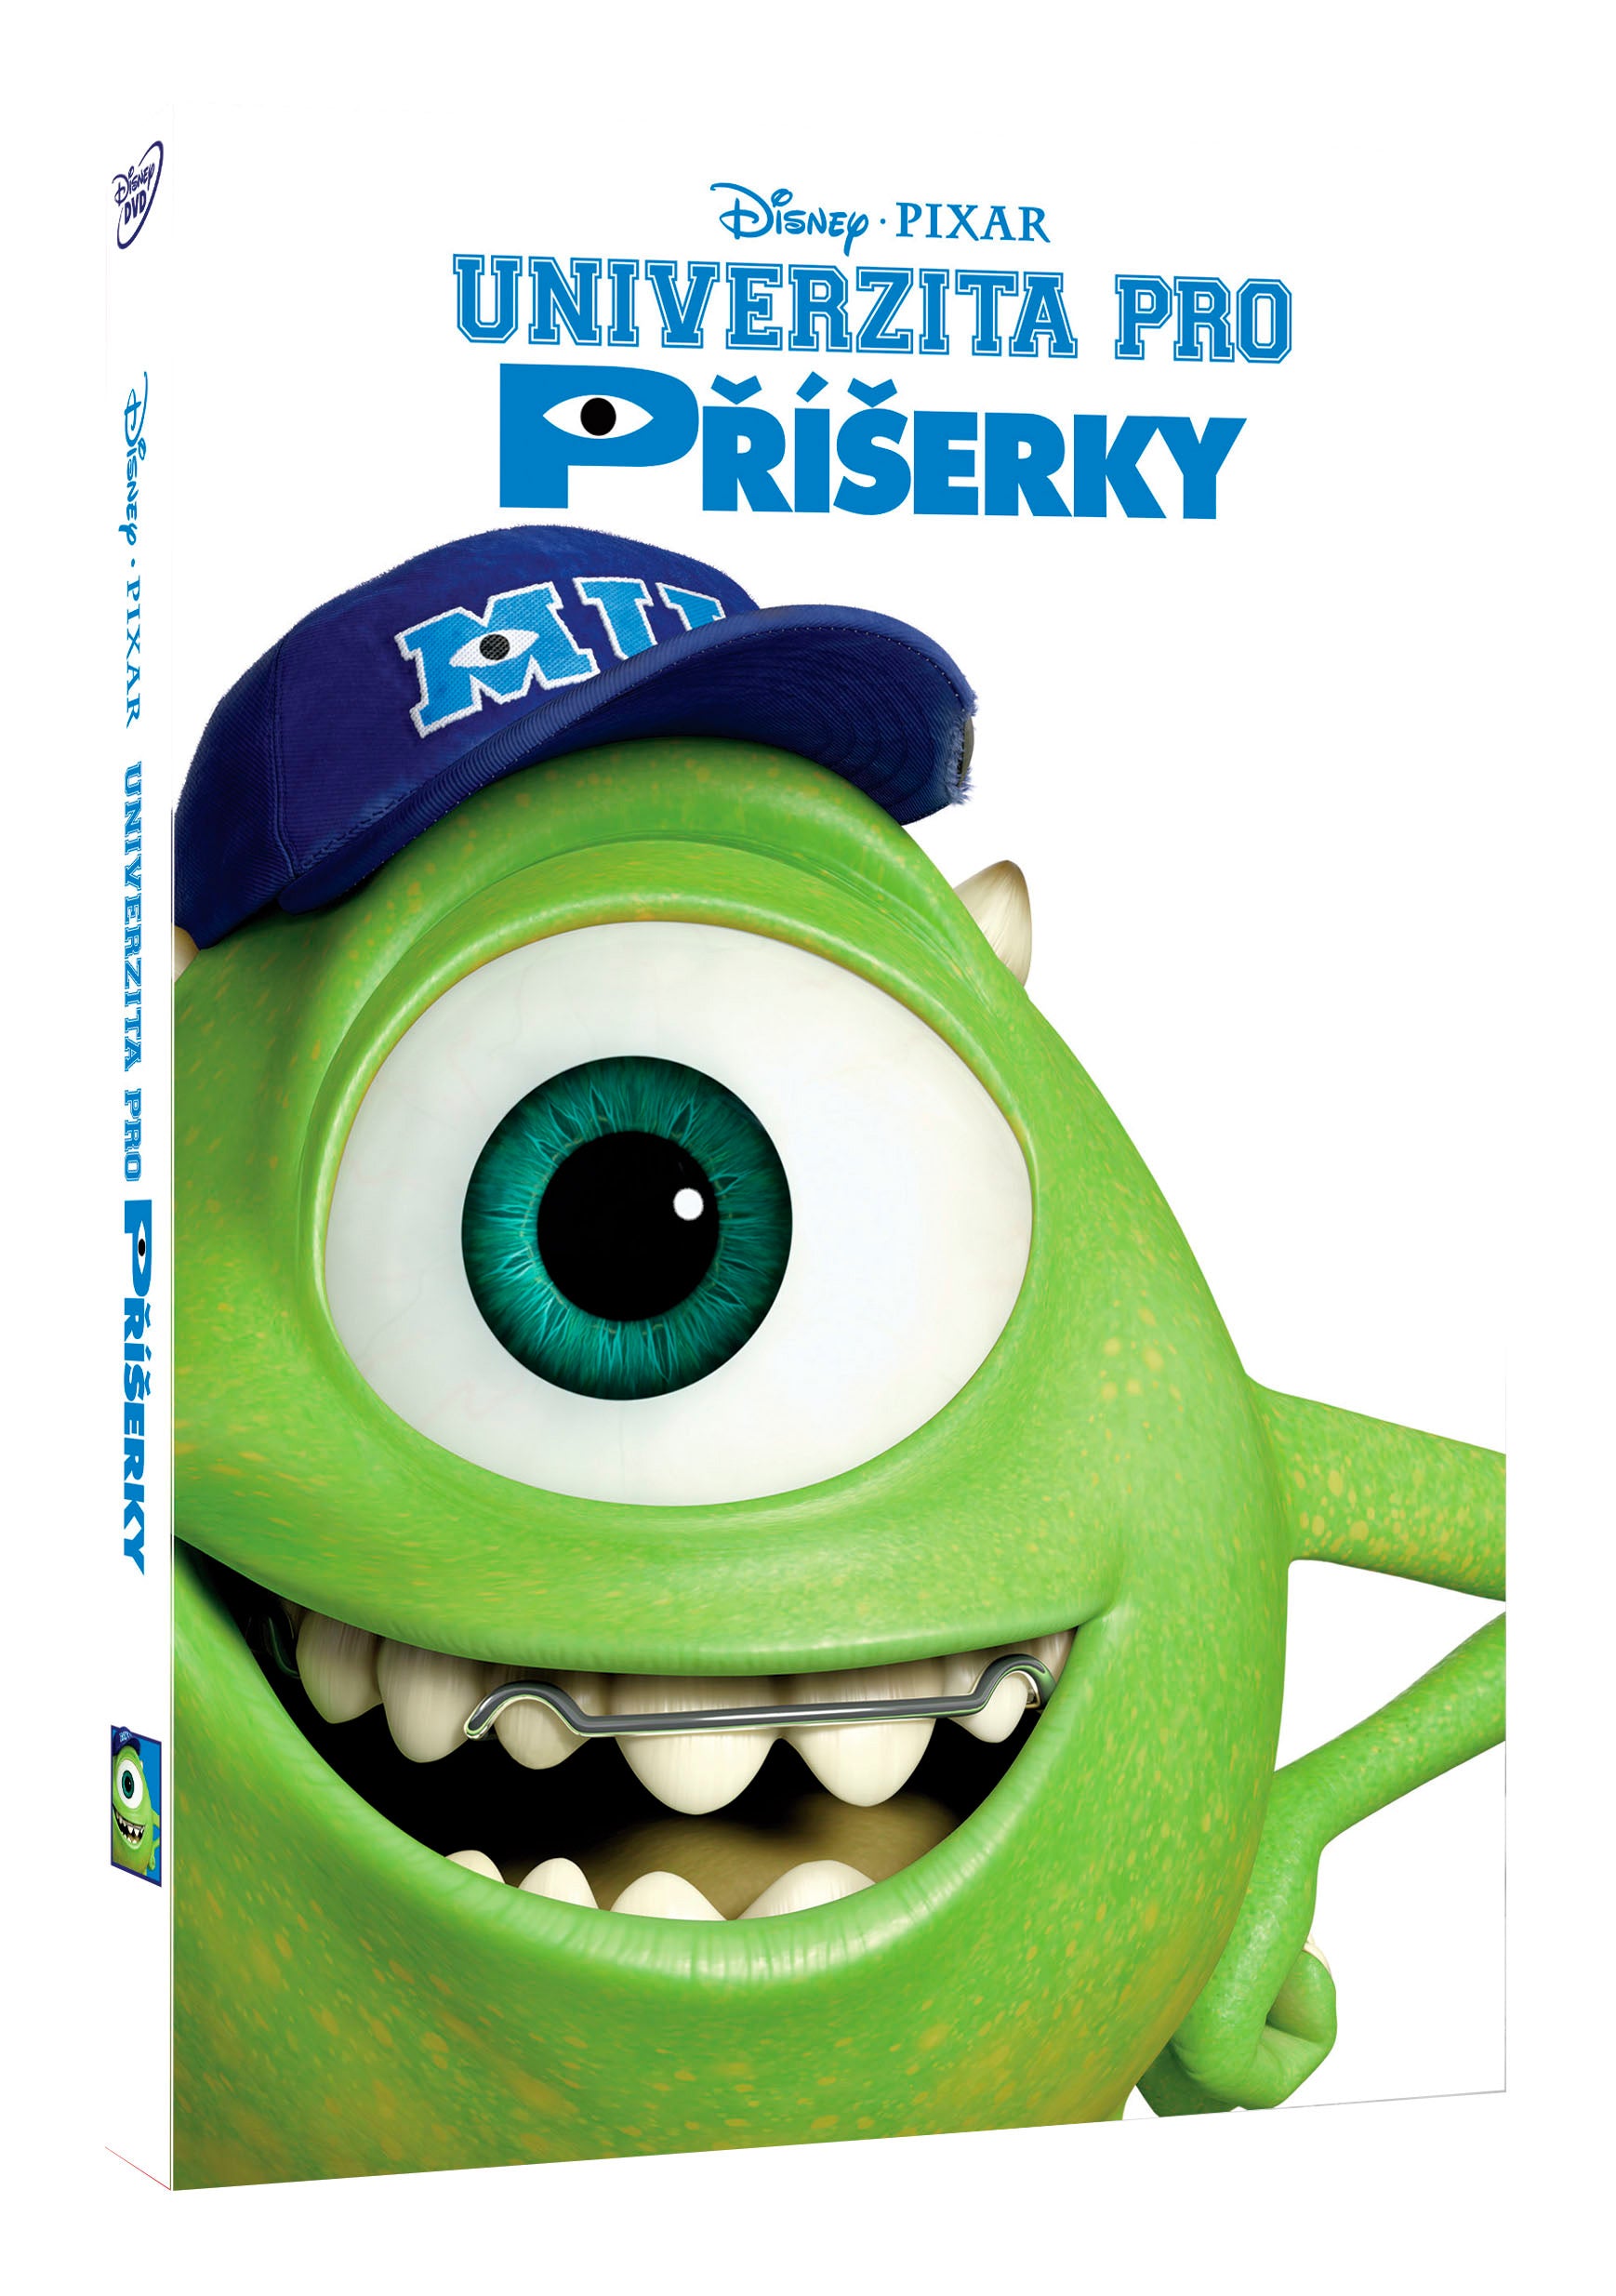 Univerzita pro priserky - Disney Pixar edice (Monsters University